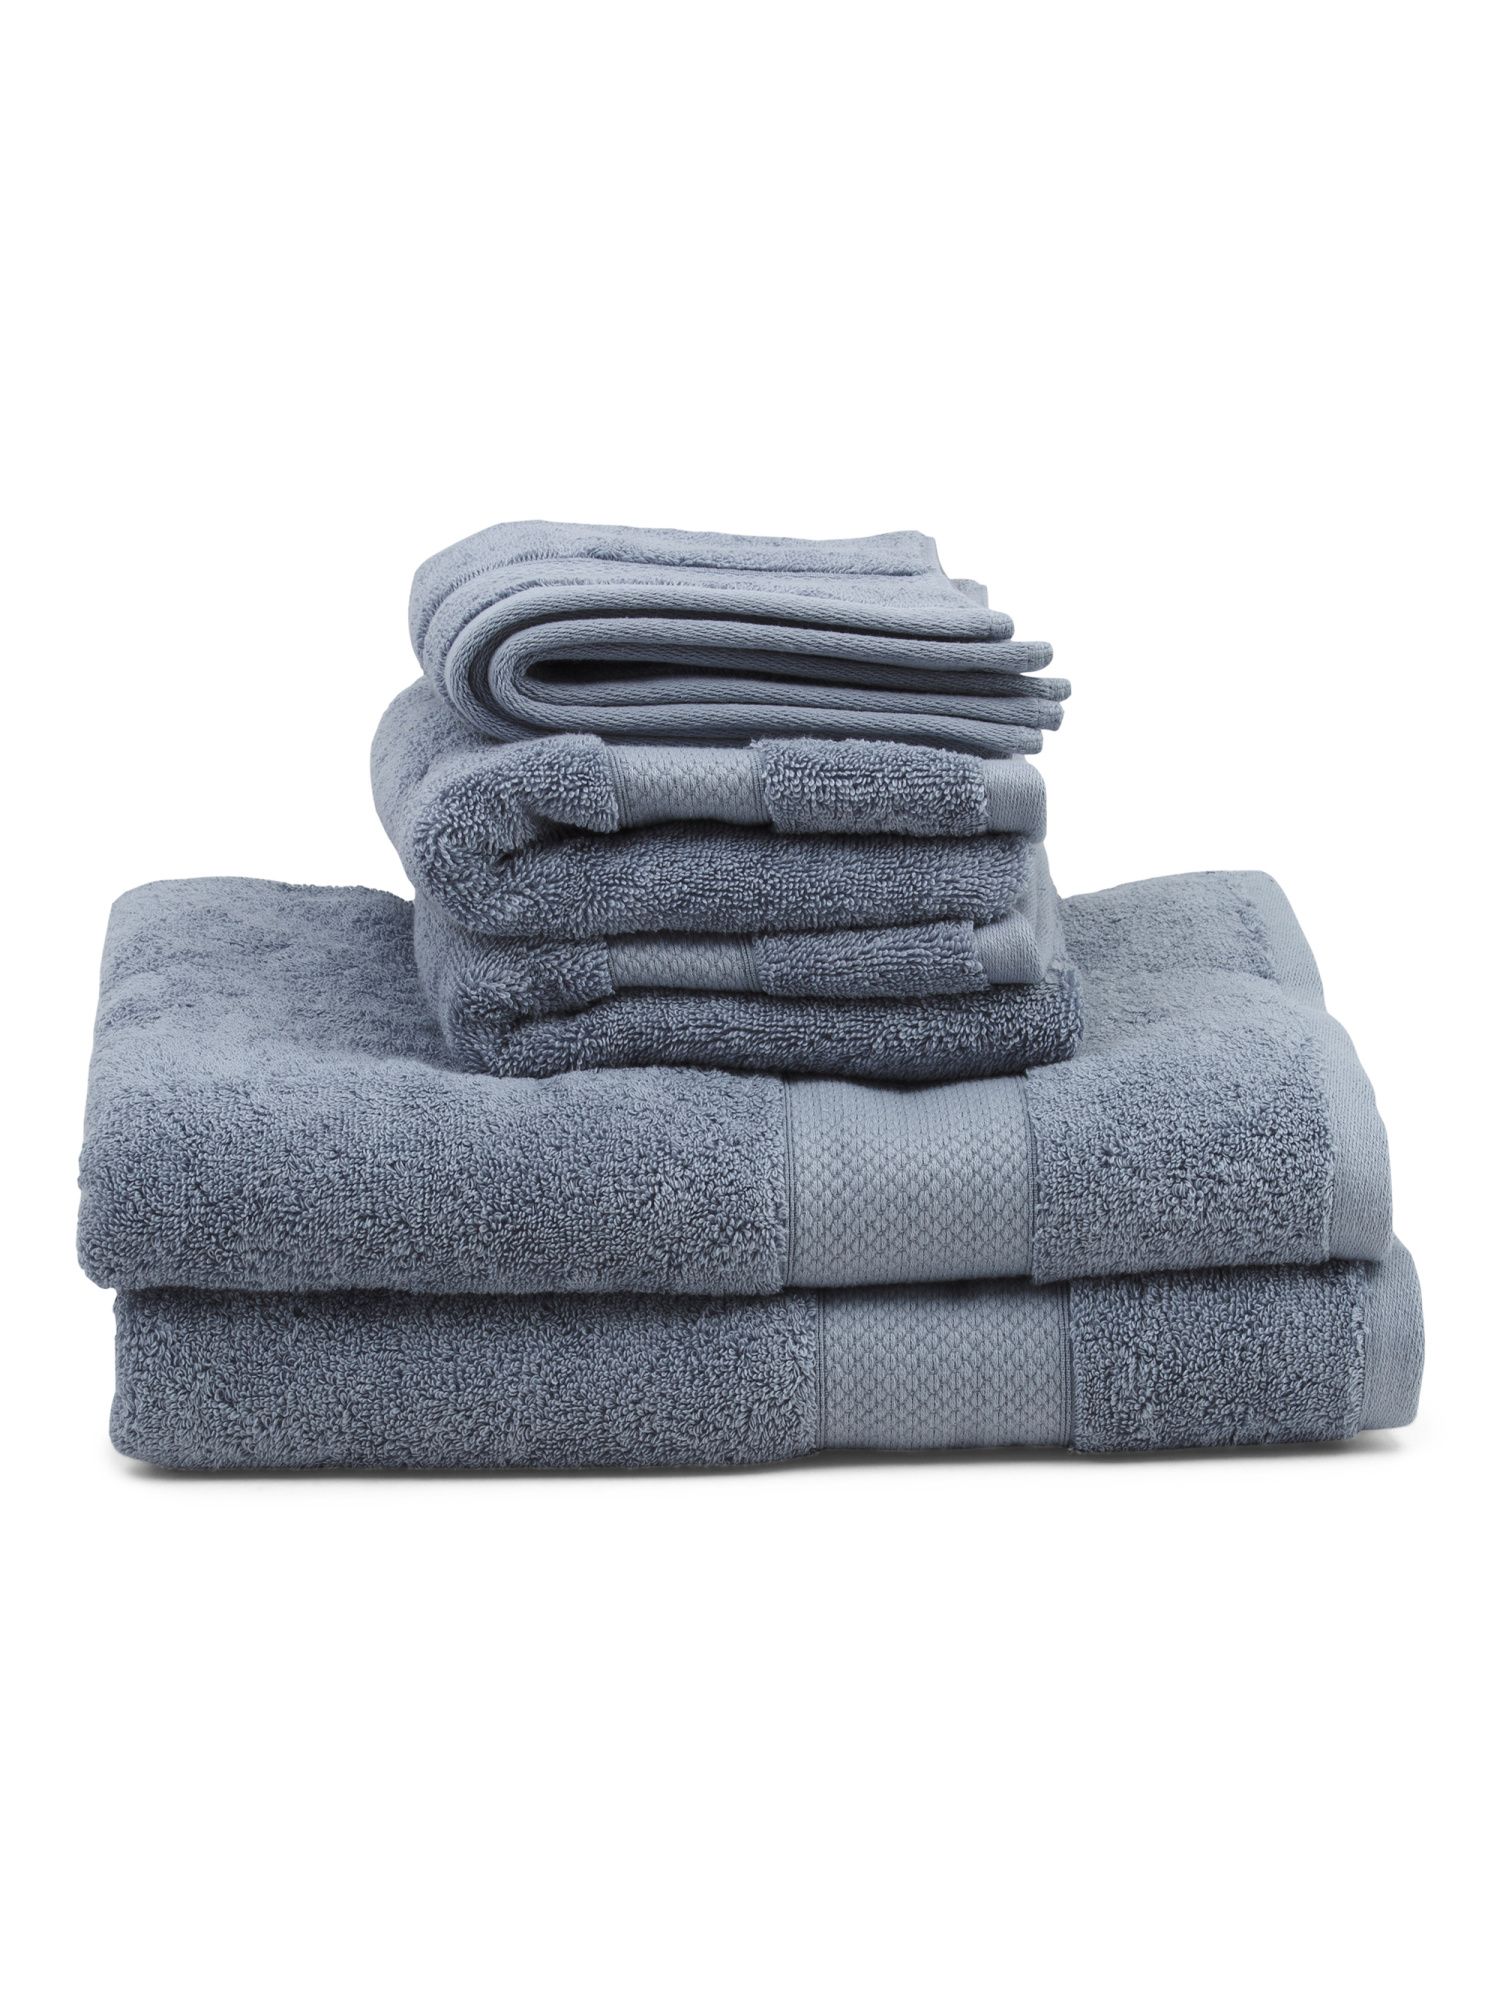 6pc Luxe Australian Cotton Towel Set | TJ Maxx